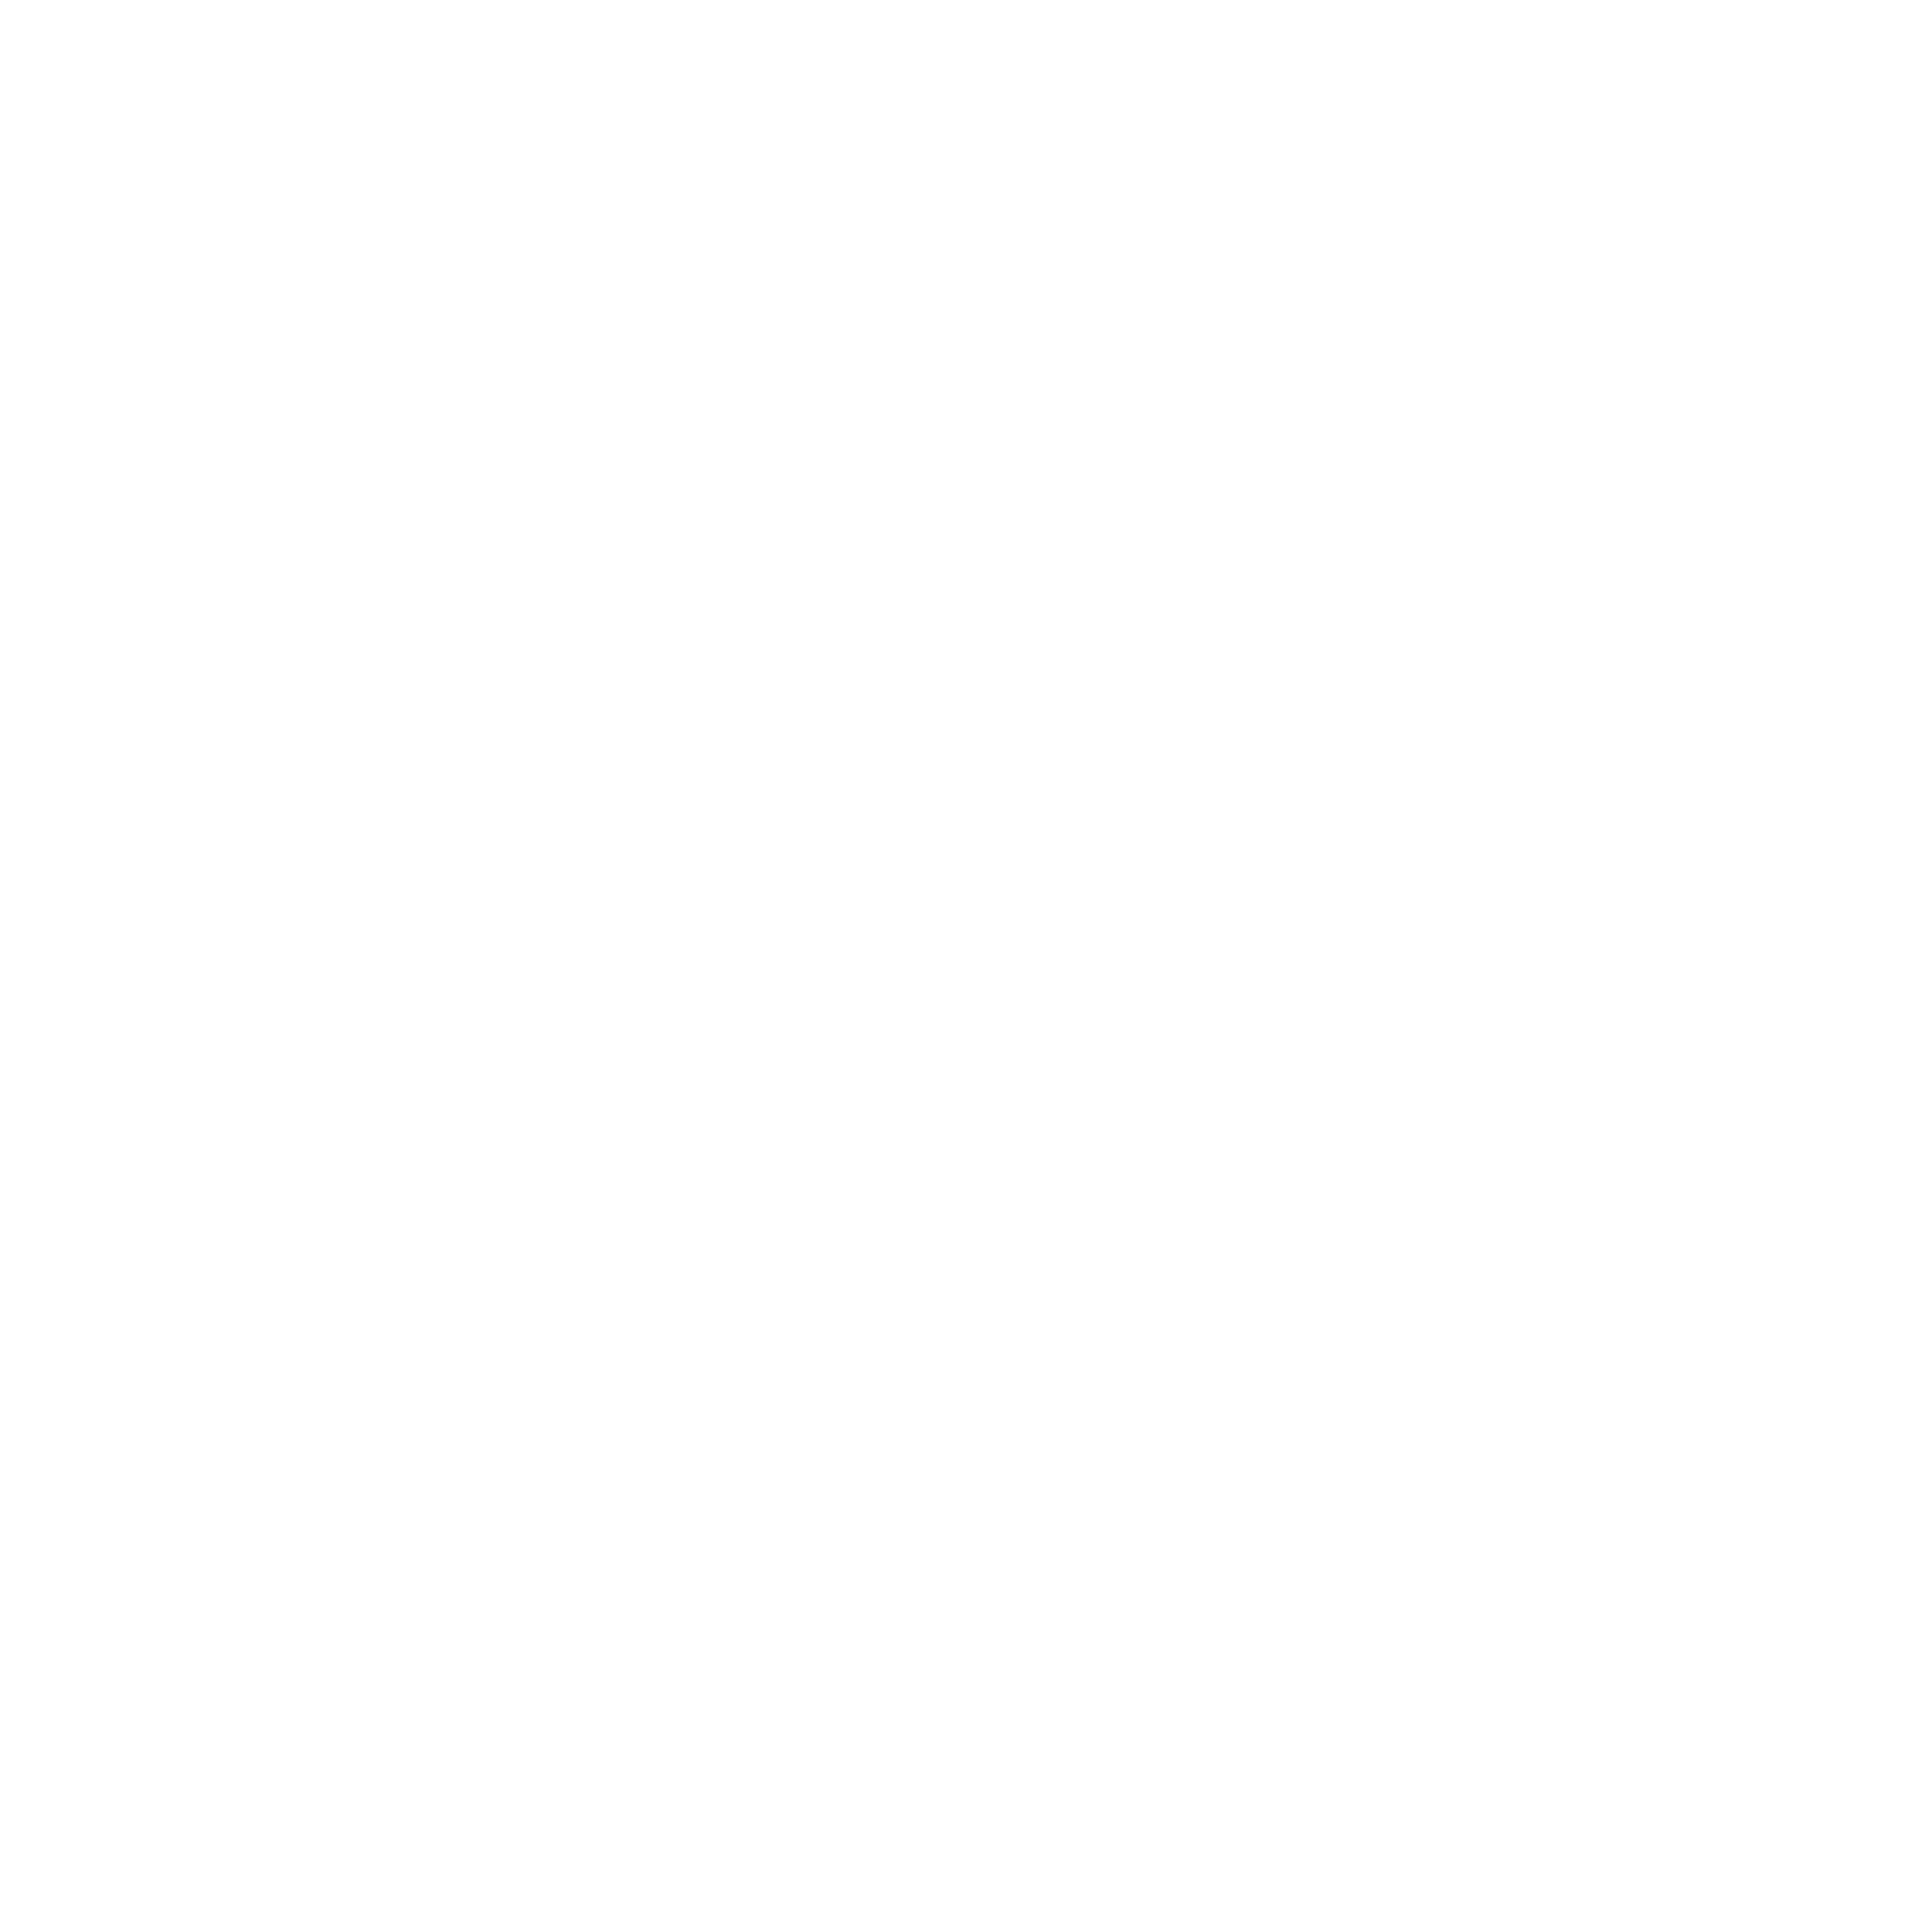 Tata Communications Logo - Tata Communications Logo PNG Transparent & SVG Vector - Freebie Supply